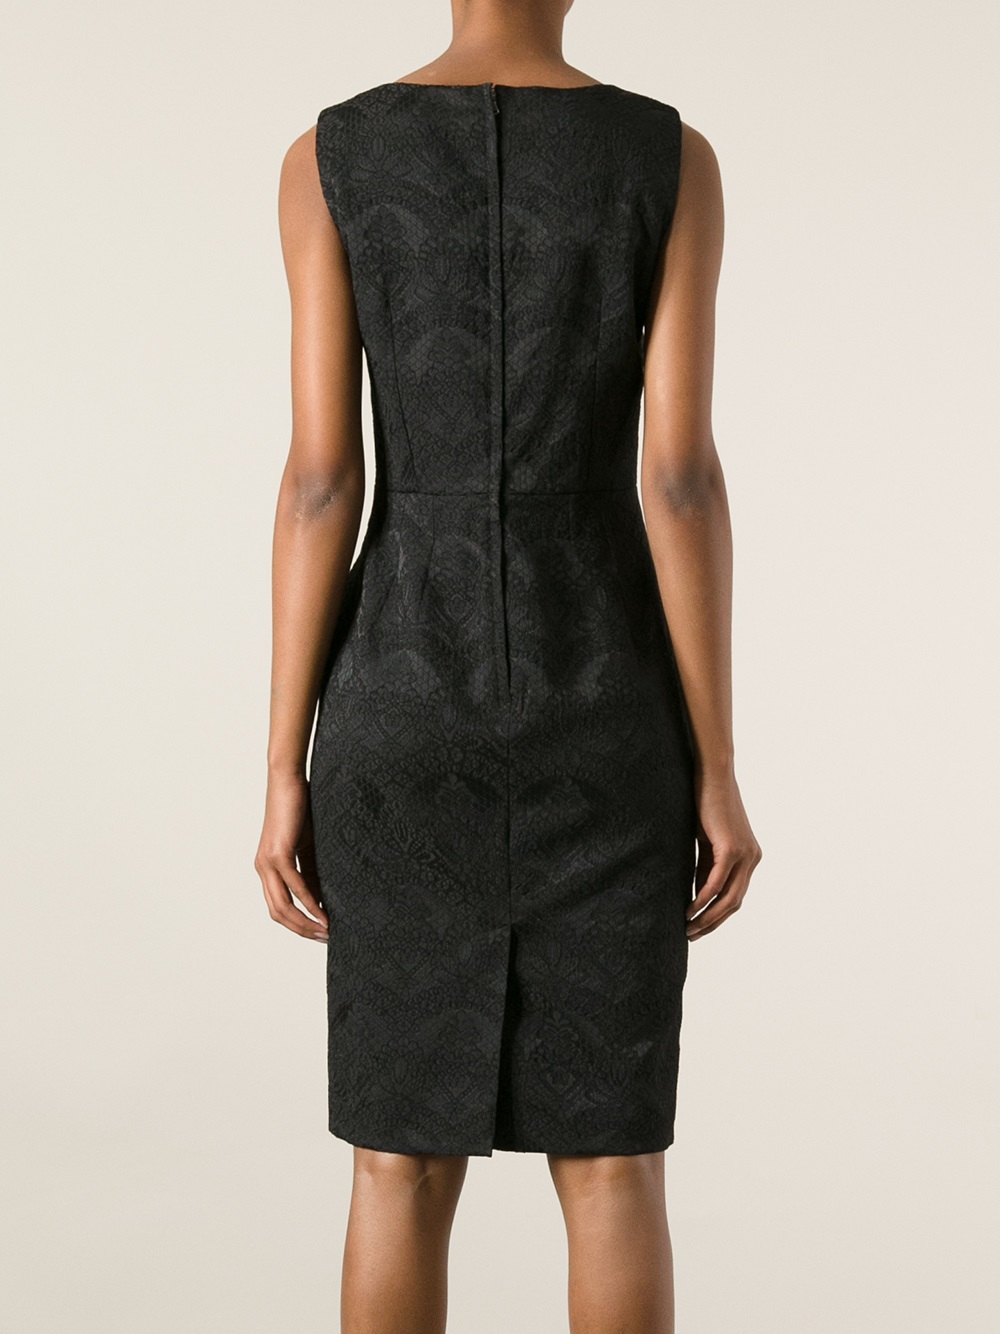 Dolce & gabbana Brocade Dress in Black | Lyst